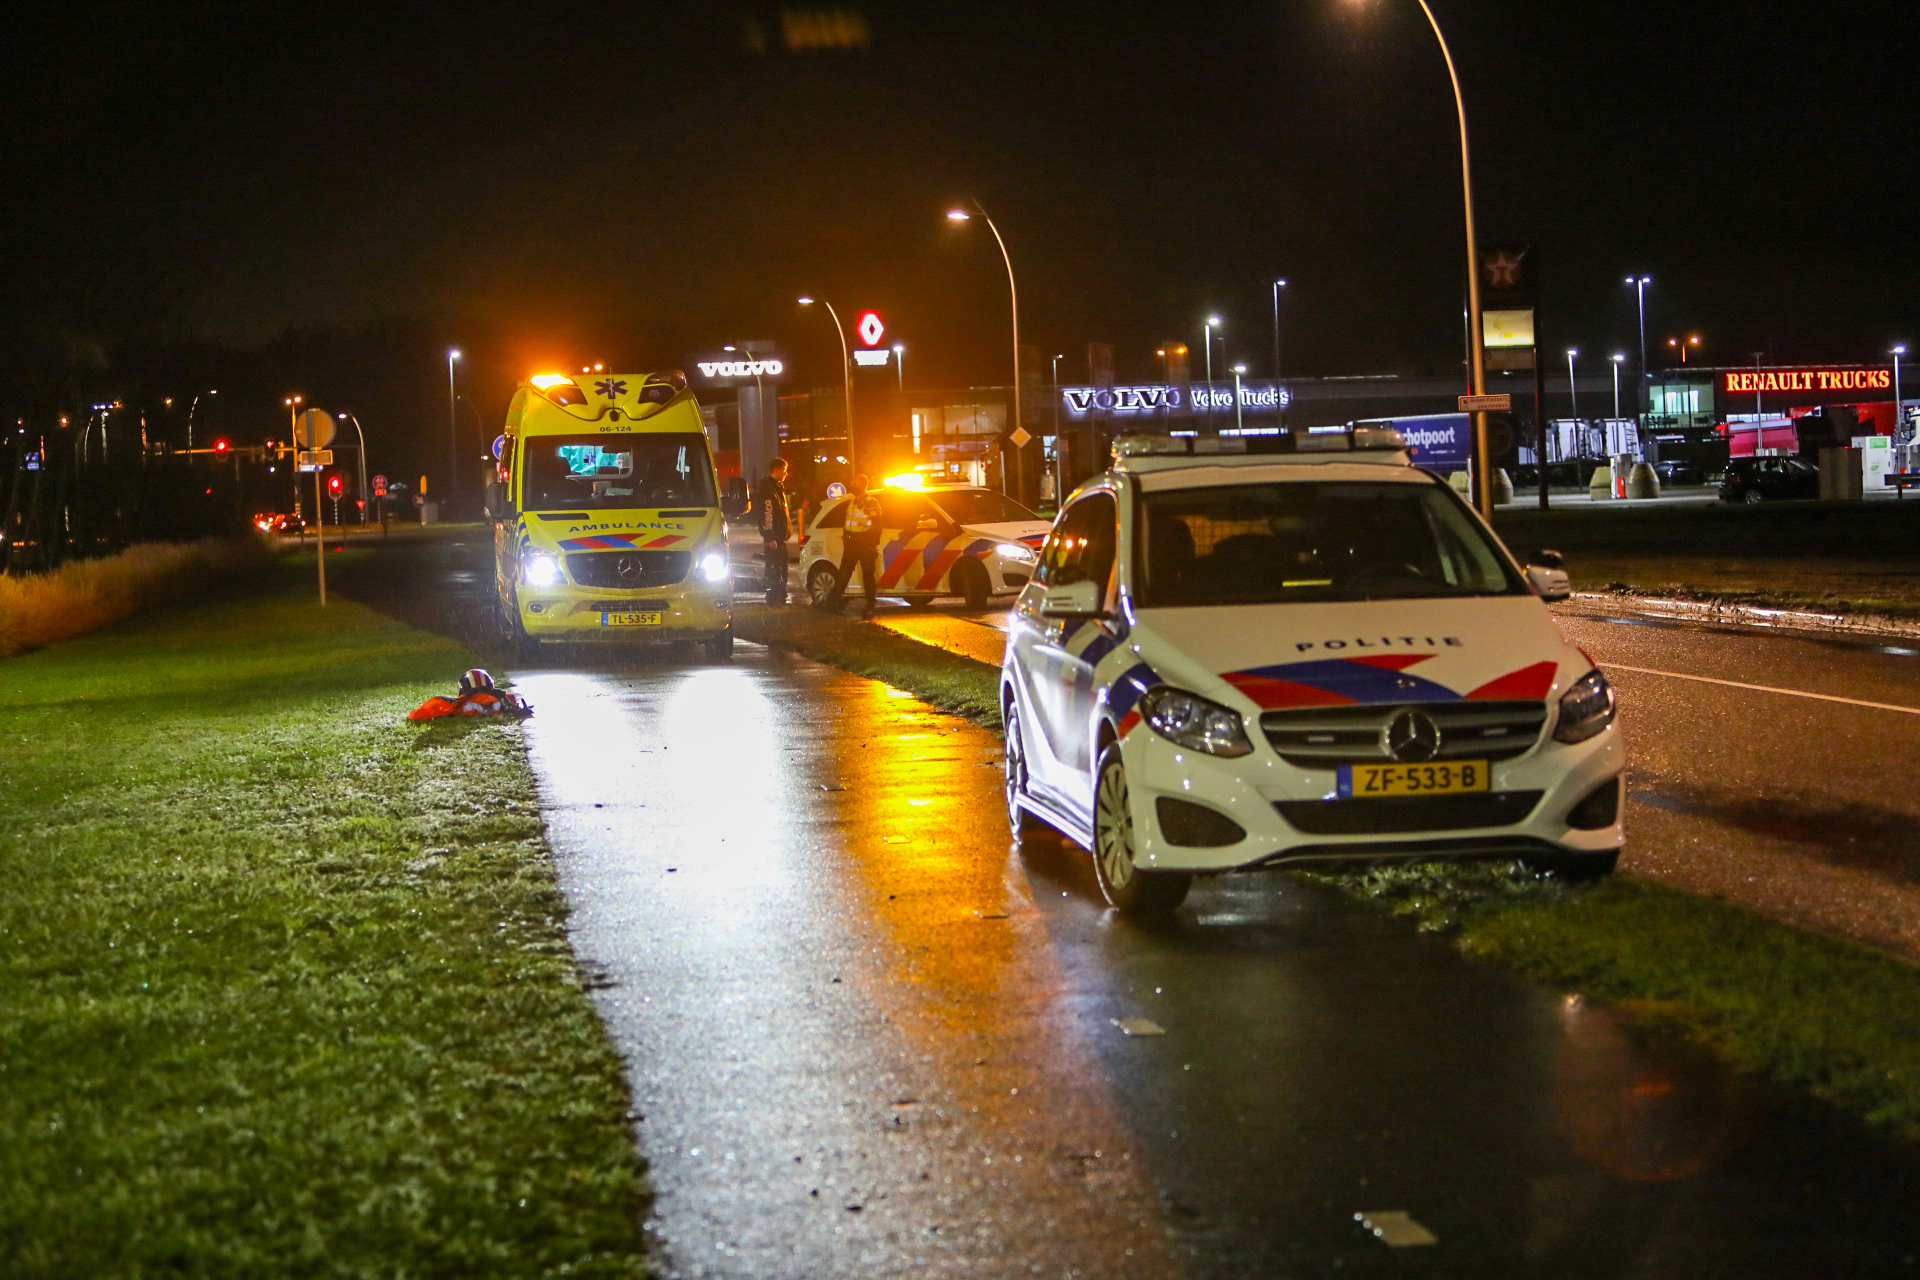 Voetganger gewond na botsing met scooter in Apeldoorn